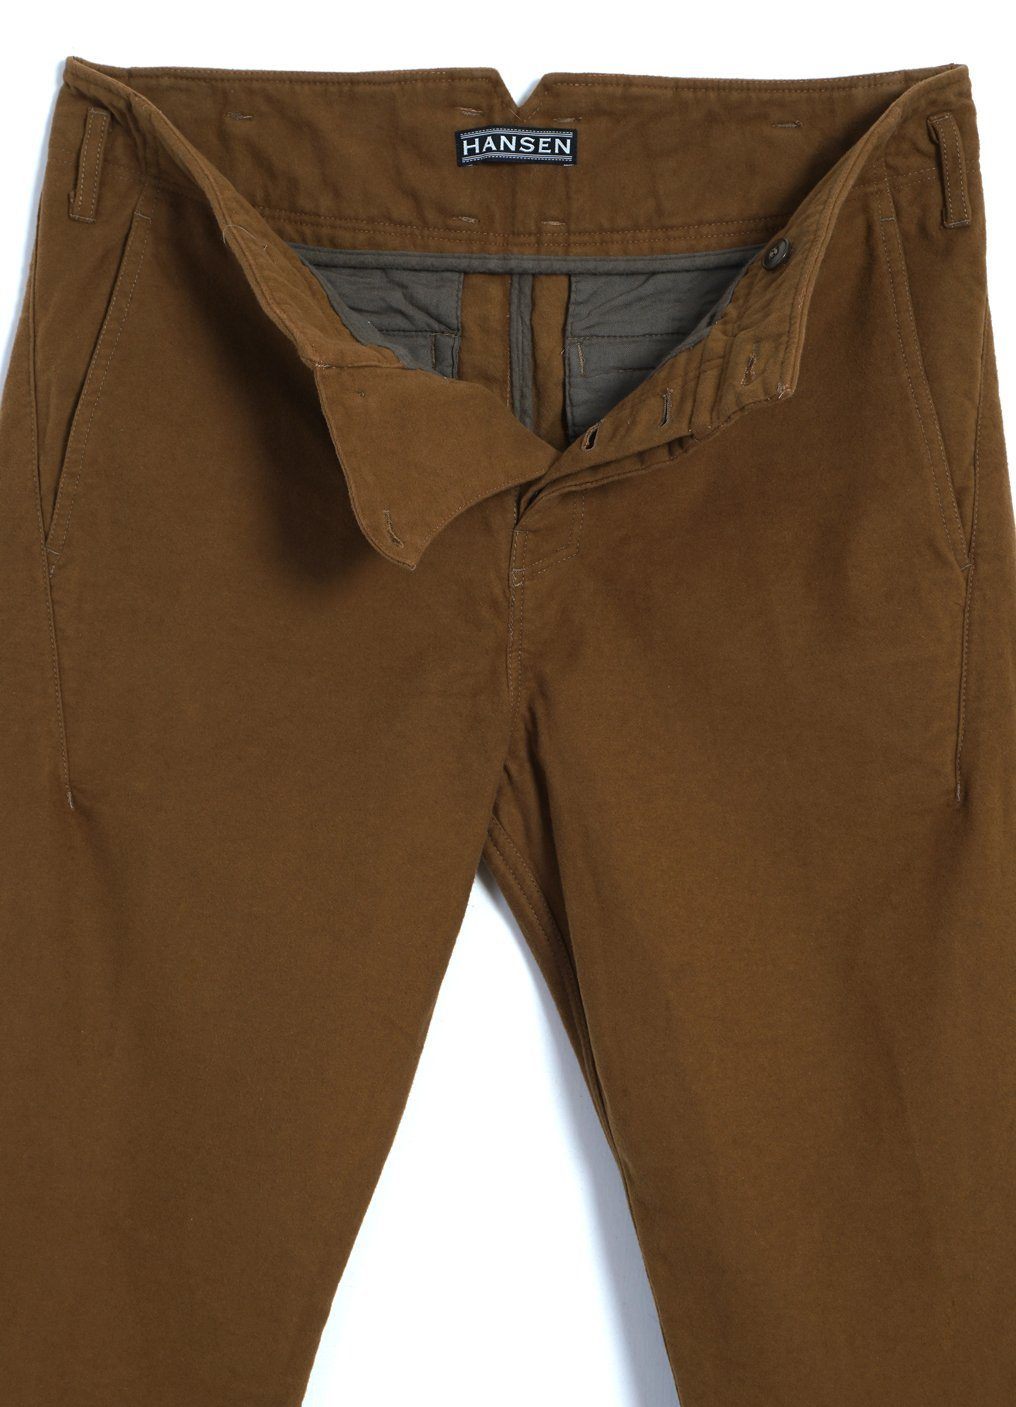 HANSEN GARMENTS - SVENNING | Slim Fit Trousers | Turmeric - HANSEN Garments